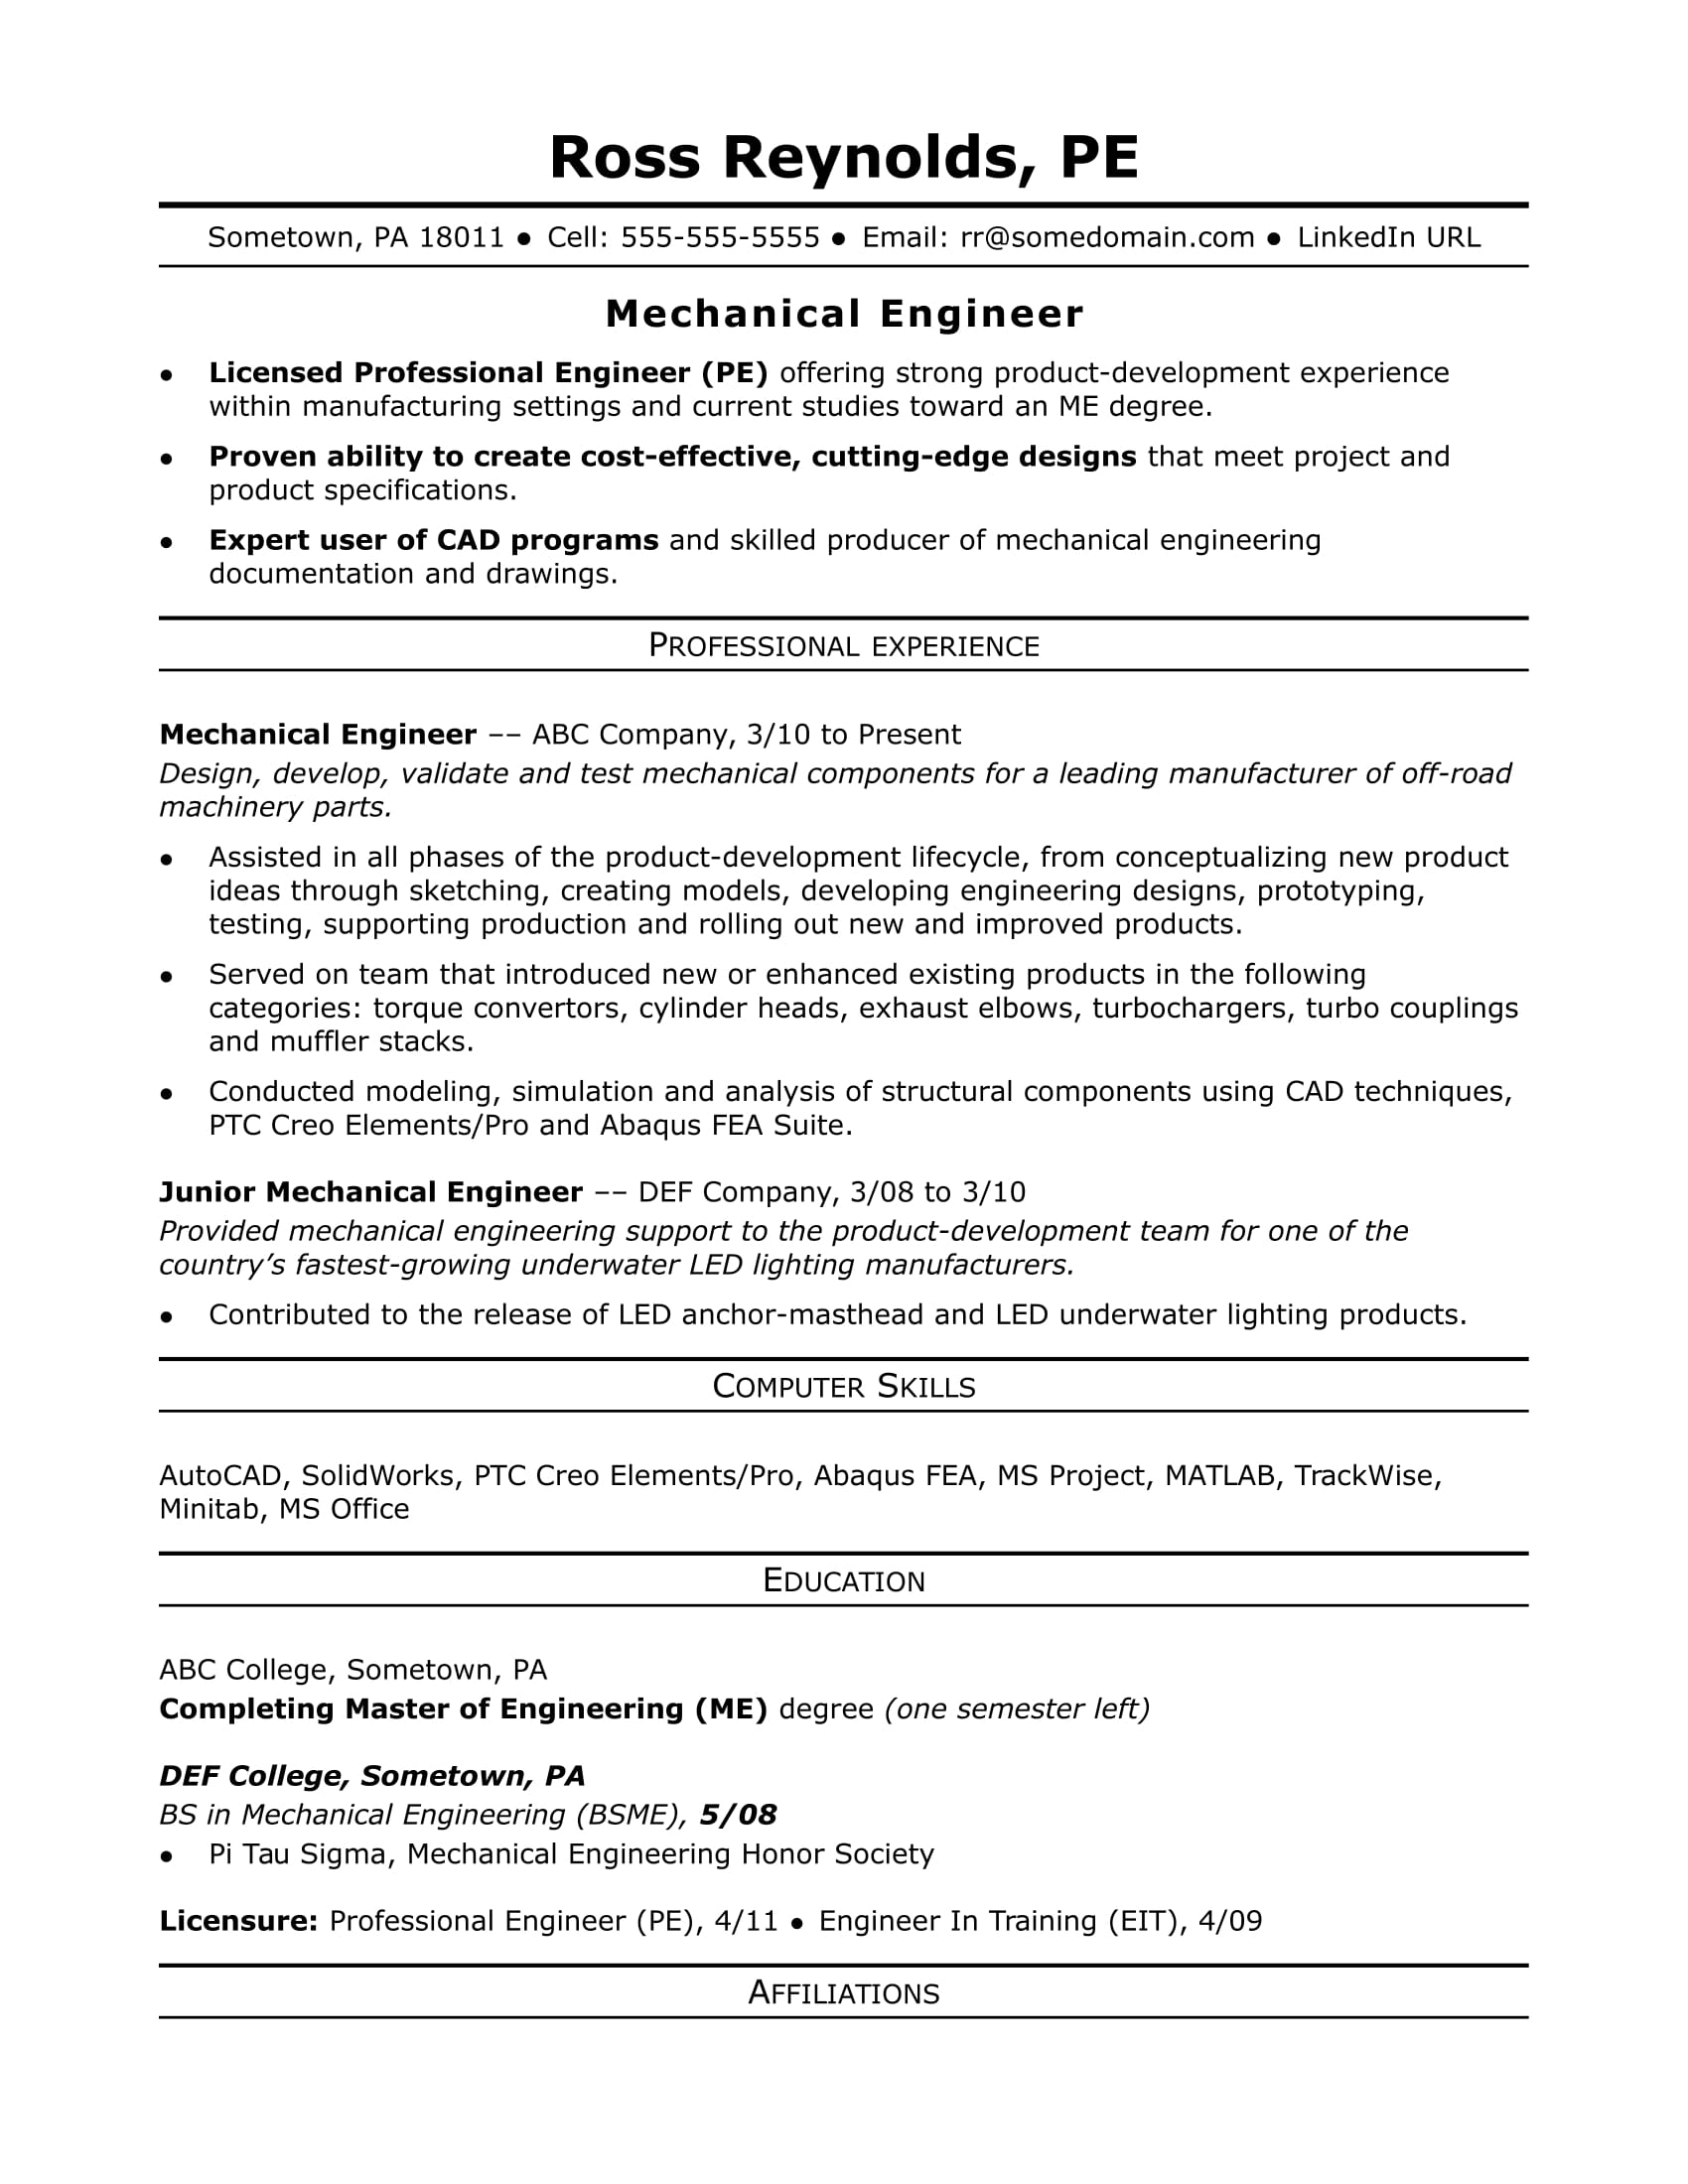 Sample Resume for a Midlevel Mechanical Engineer